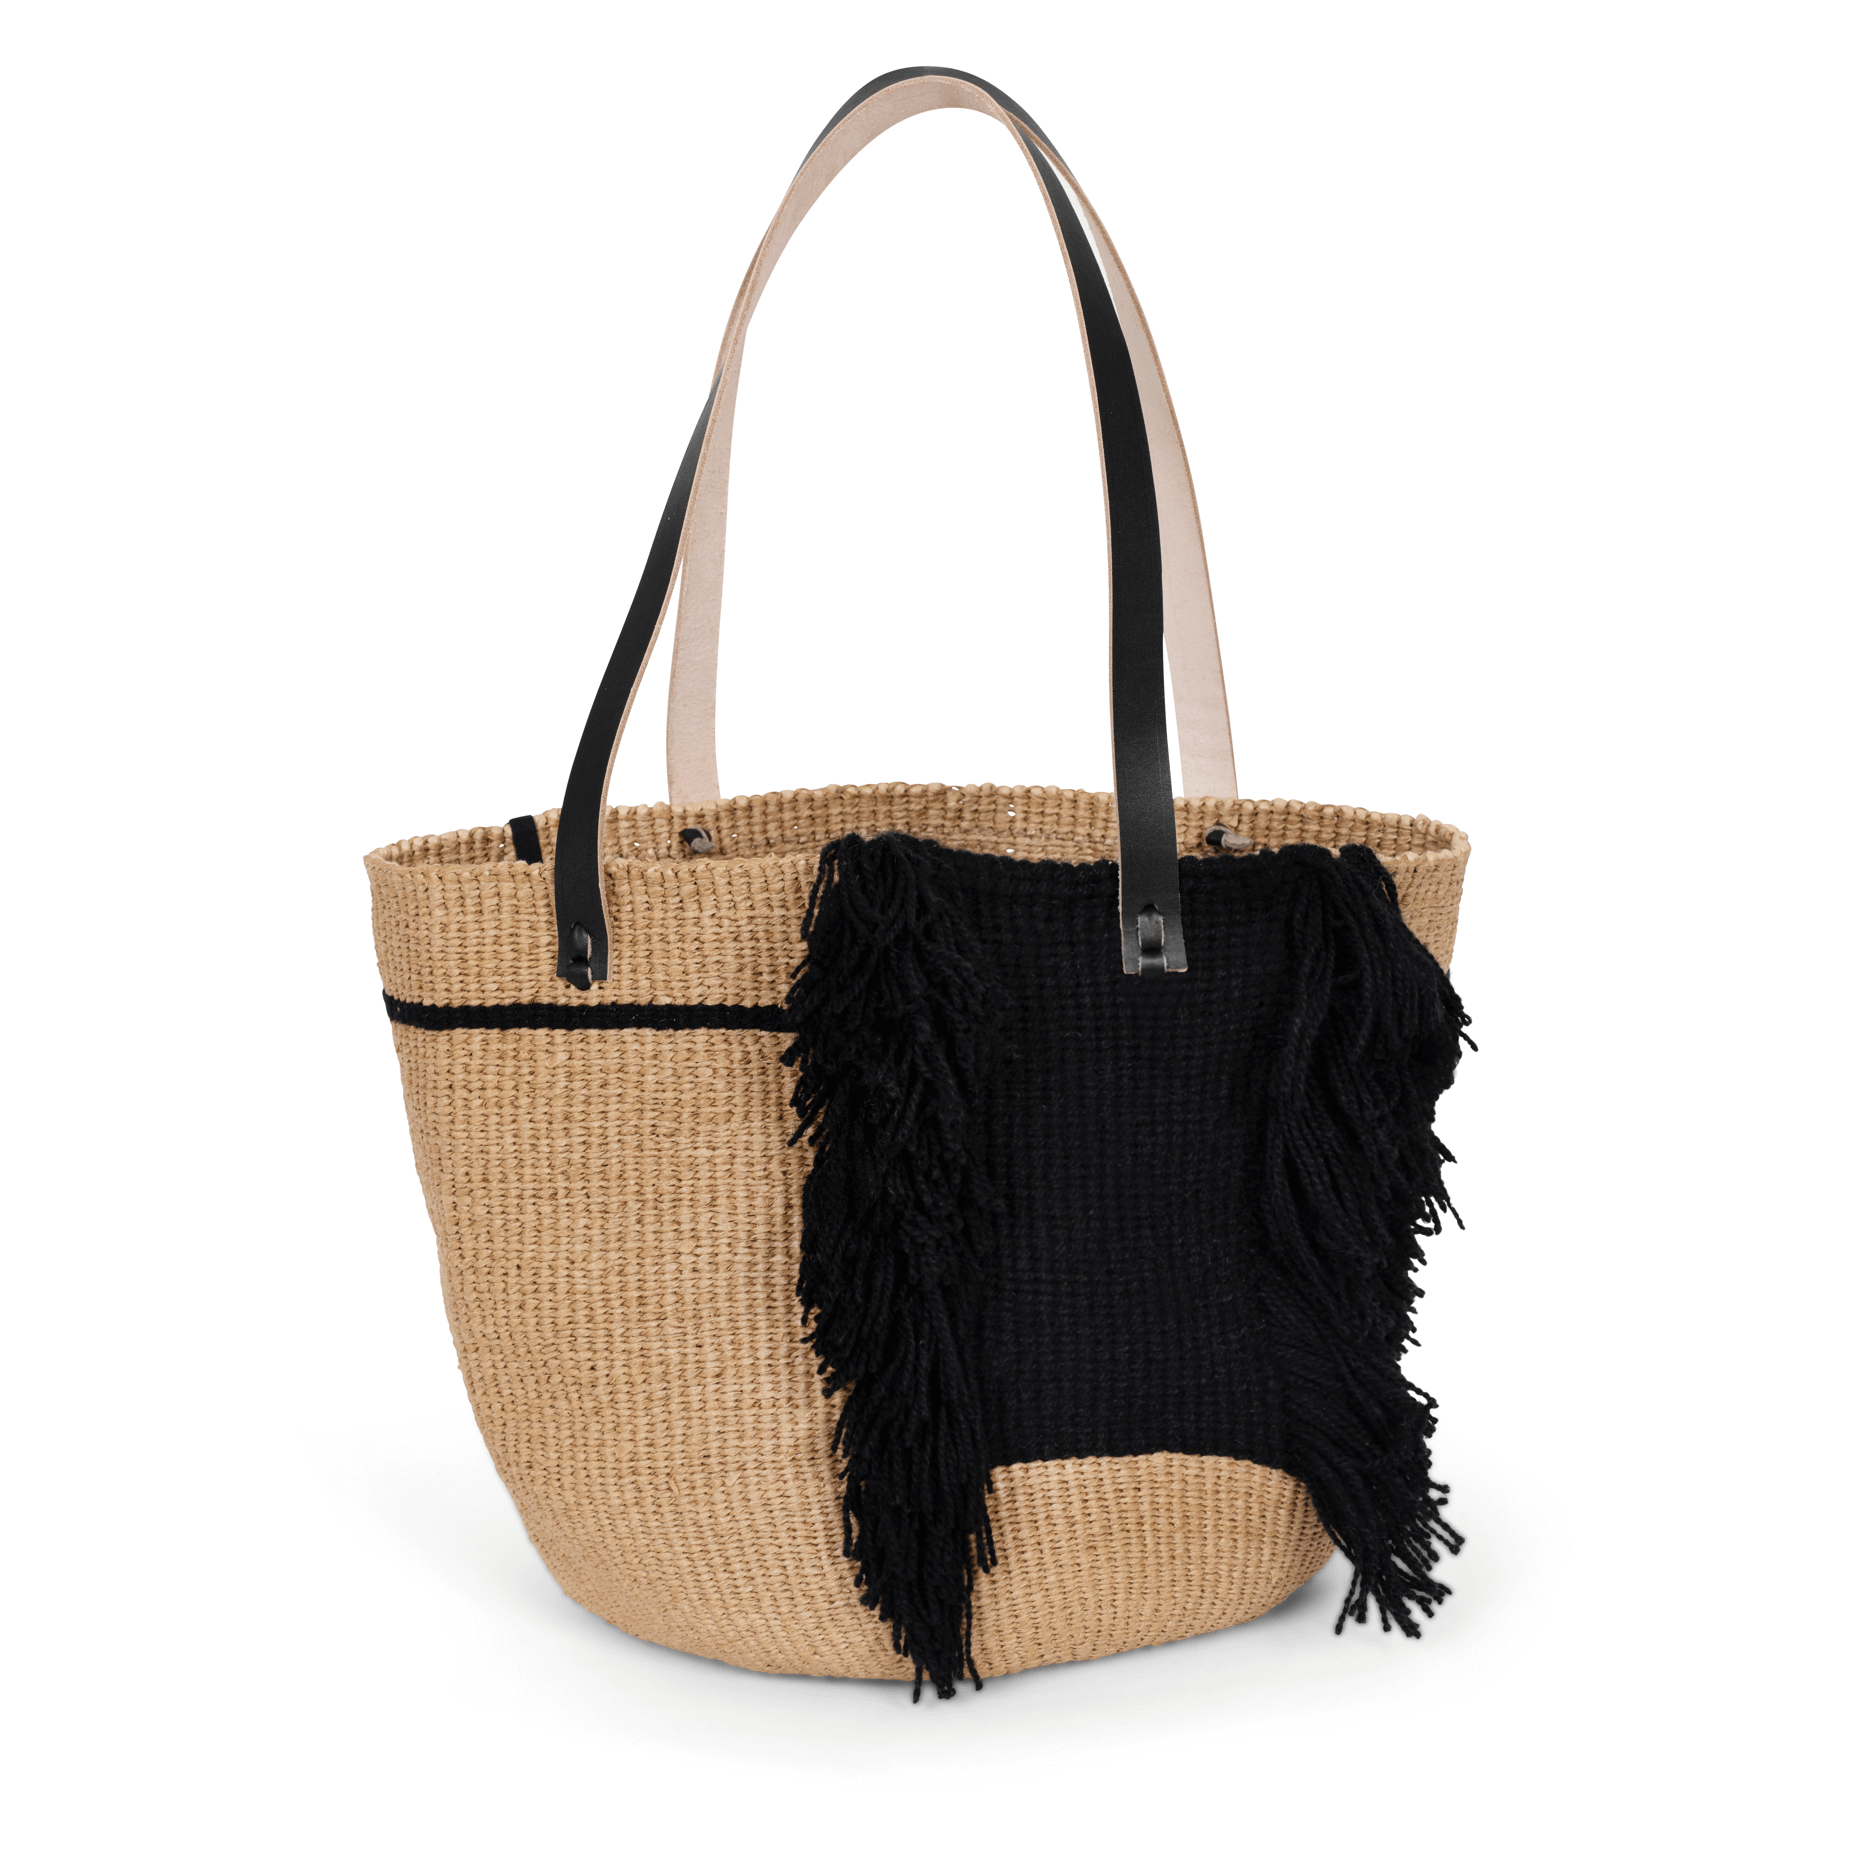 Mifuko Wool and paper Shopper basket M Pamba shopper basket | Ervin Latimer design black M